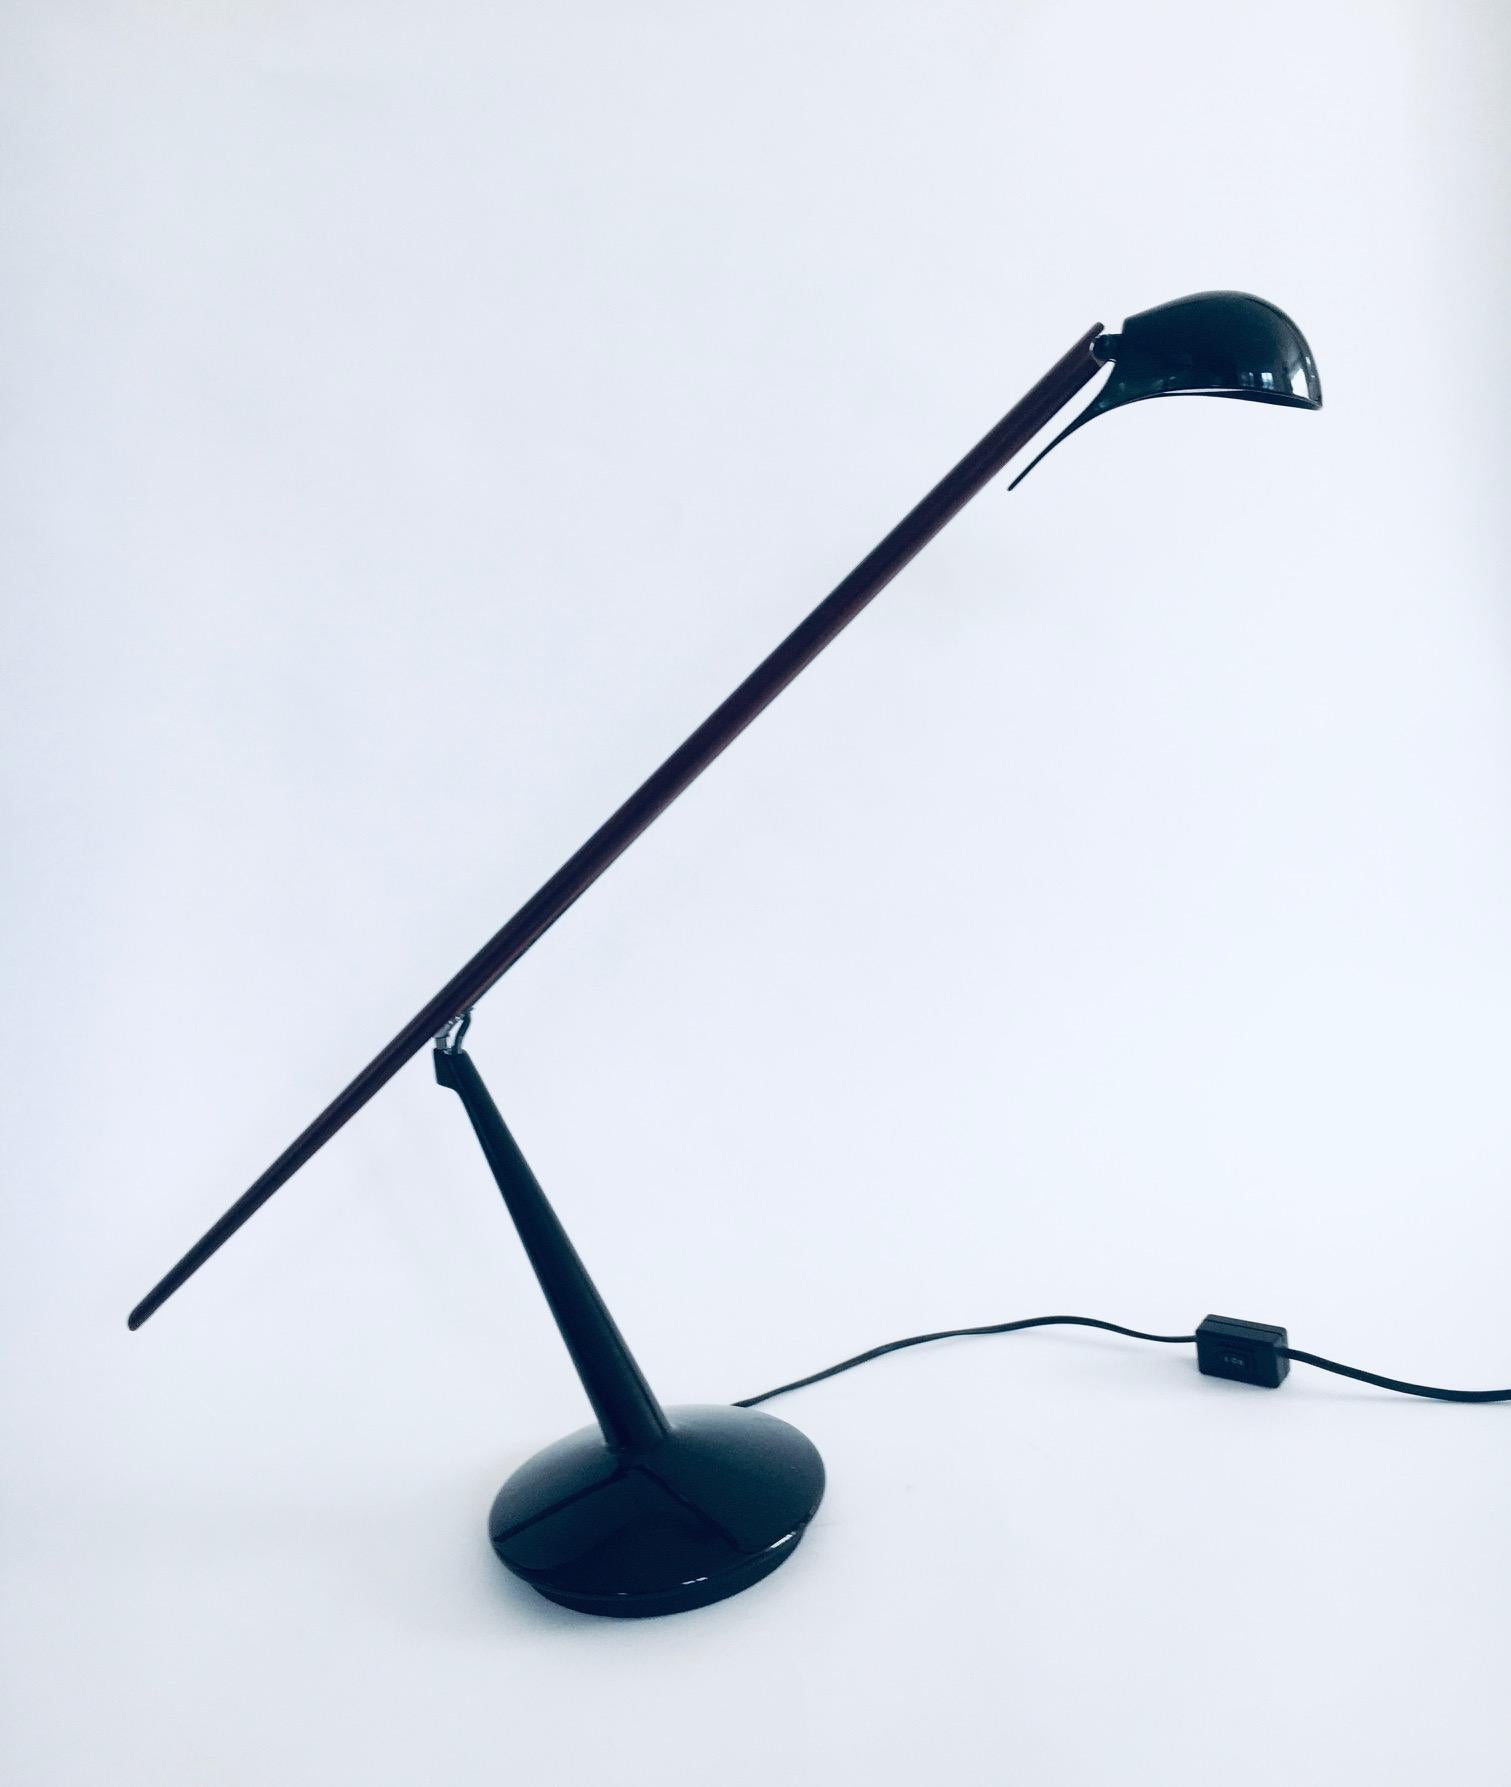 Metal Postmodern Design 'Bluebird' Desk Lamp by Jorge Pensi for B. Lux, 1990's Spain For Sale